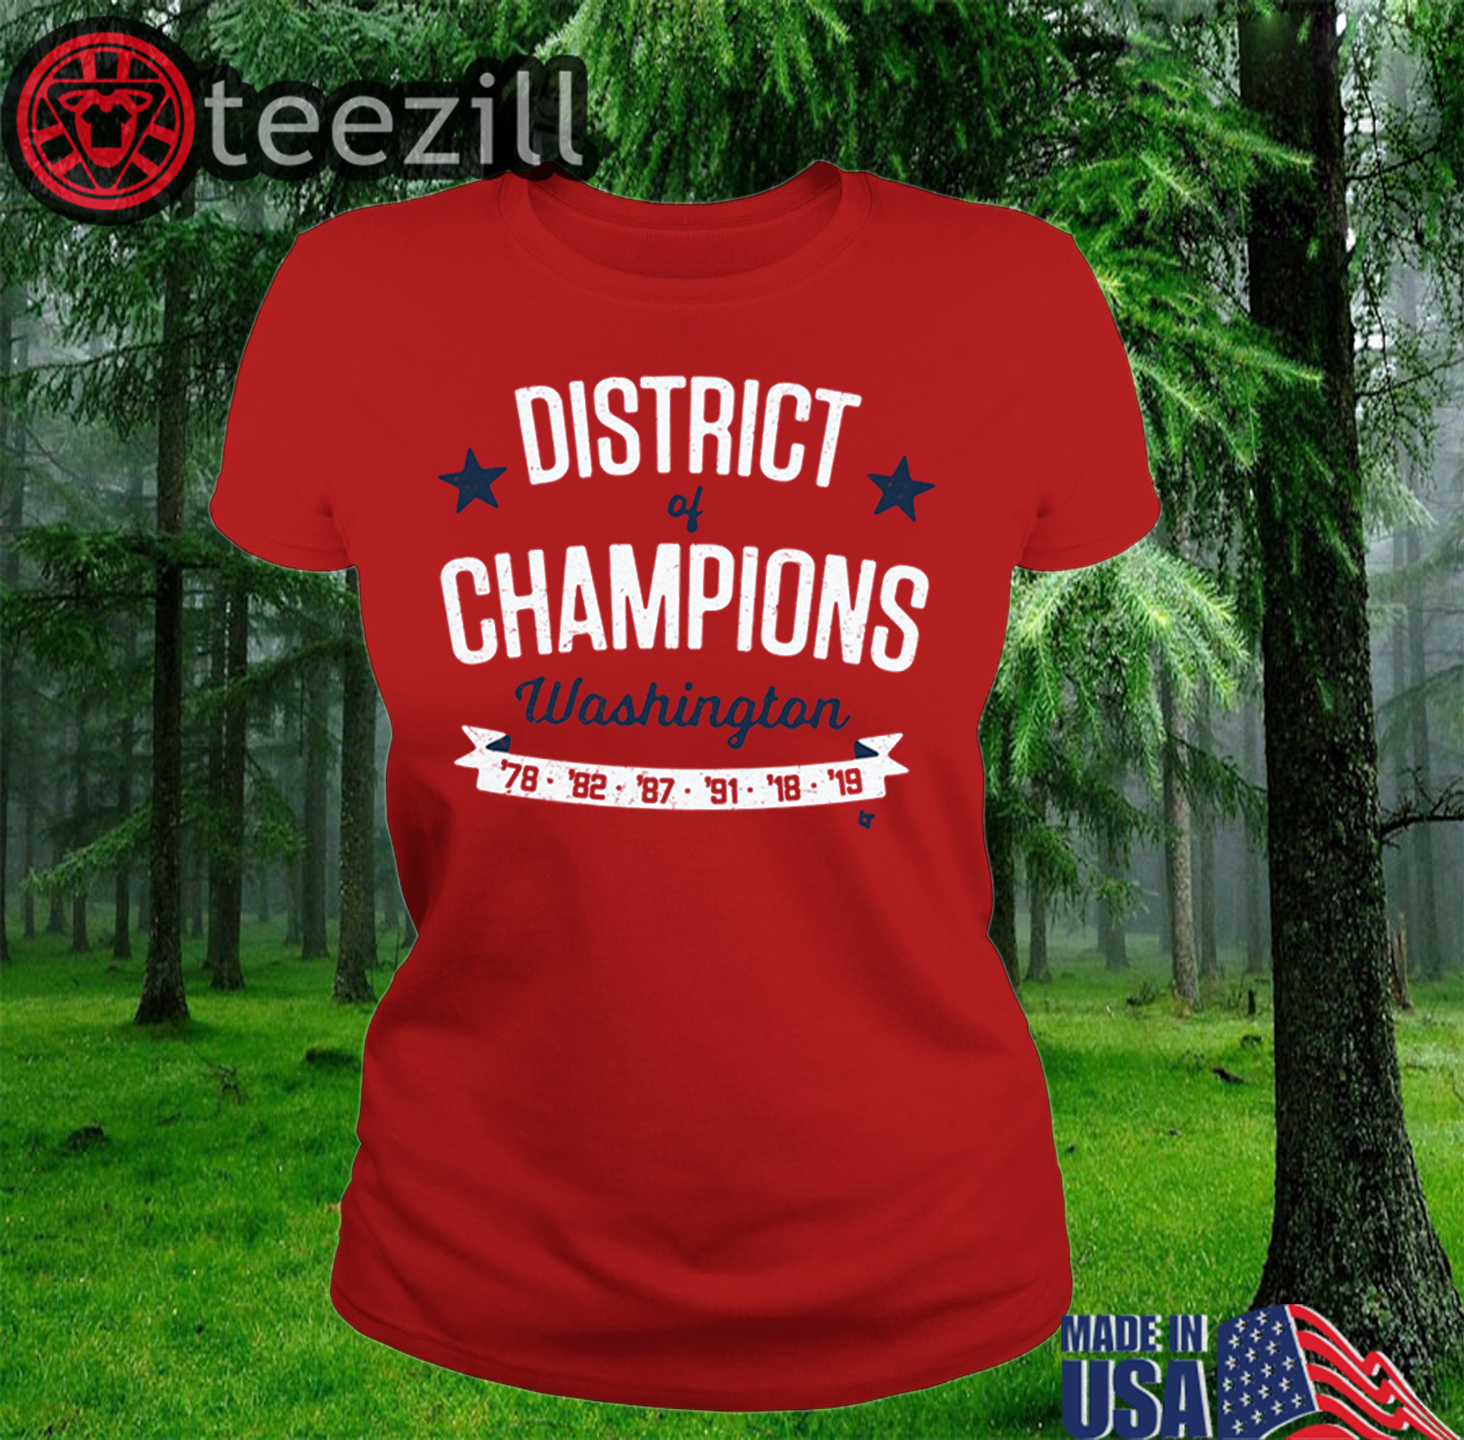 Washington District of Champions Shirt - teezill